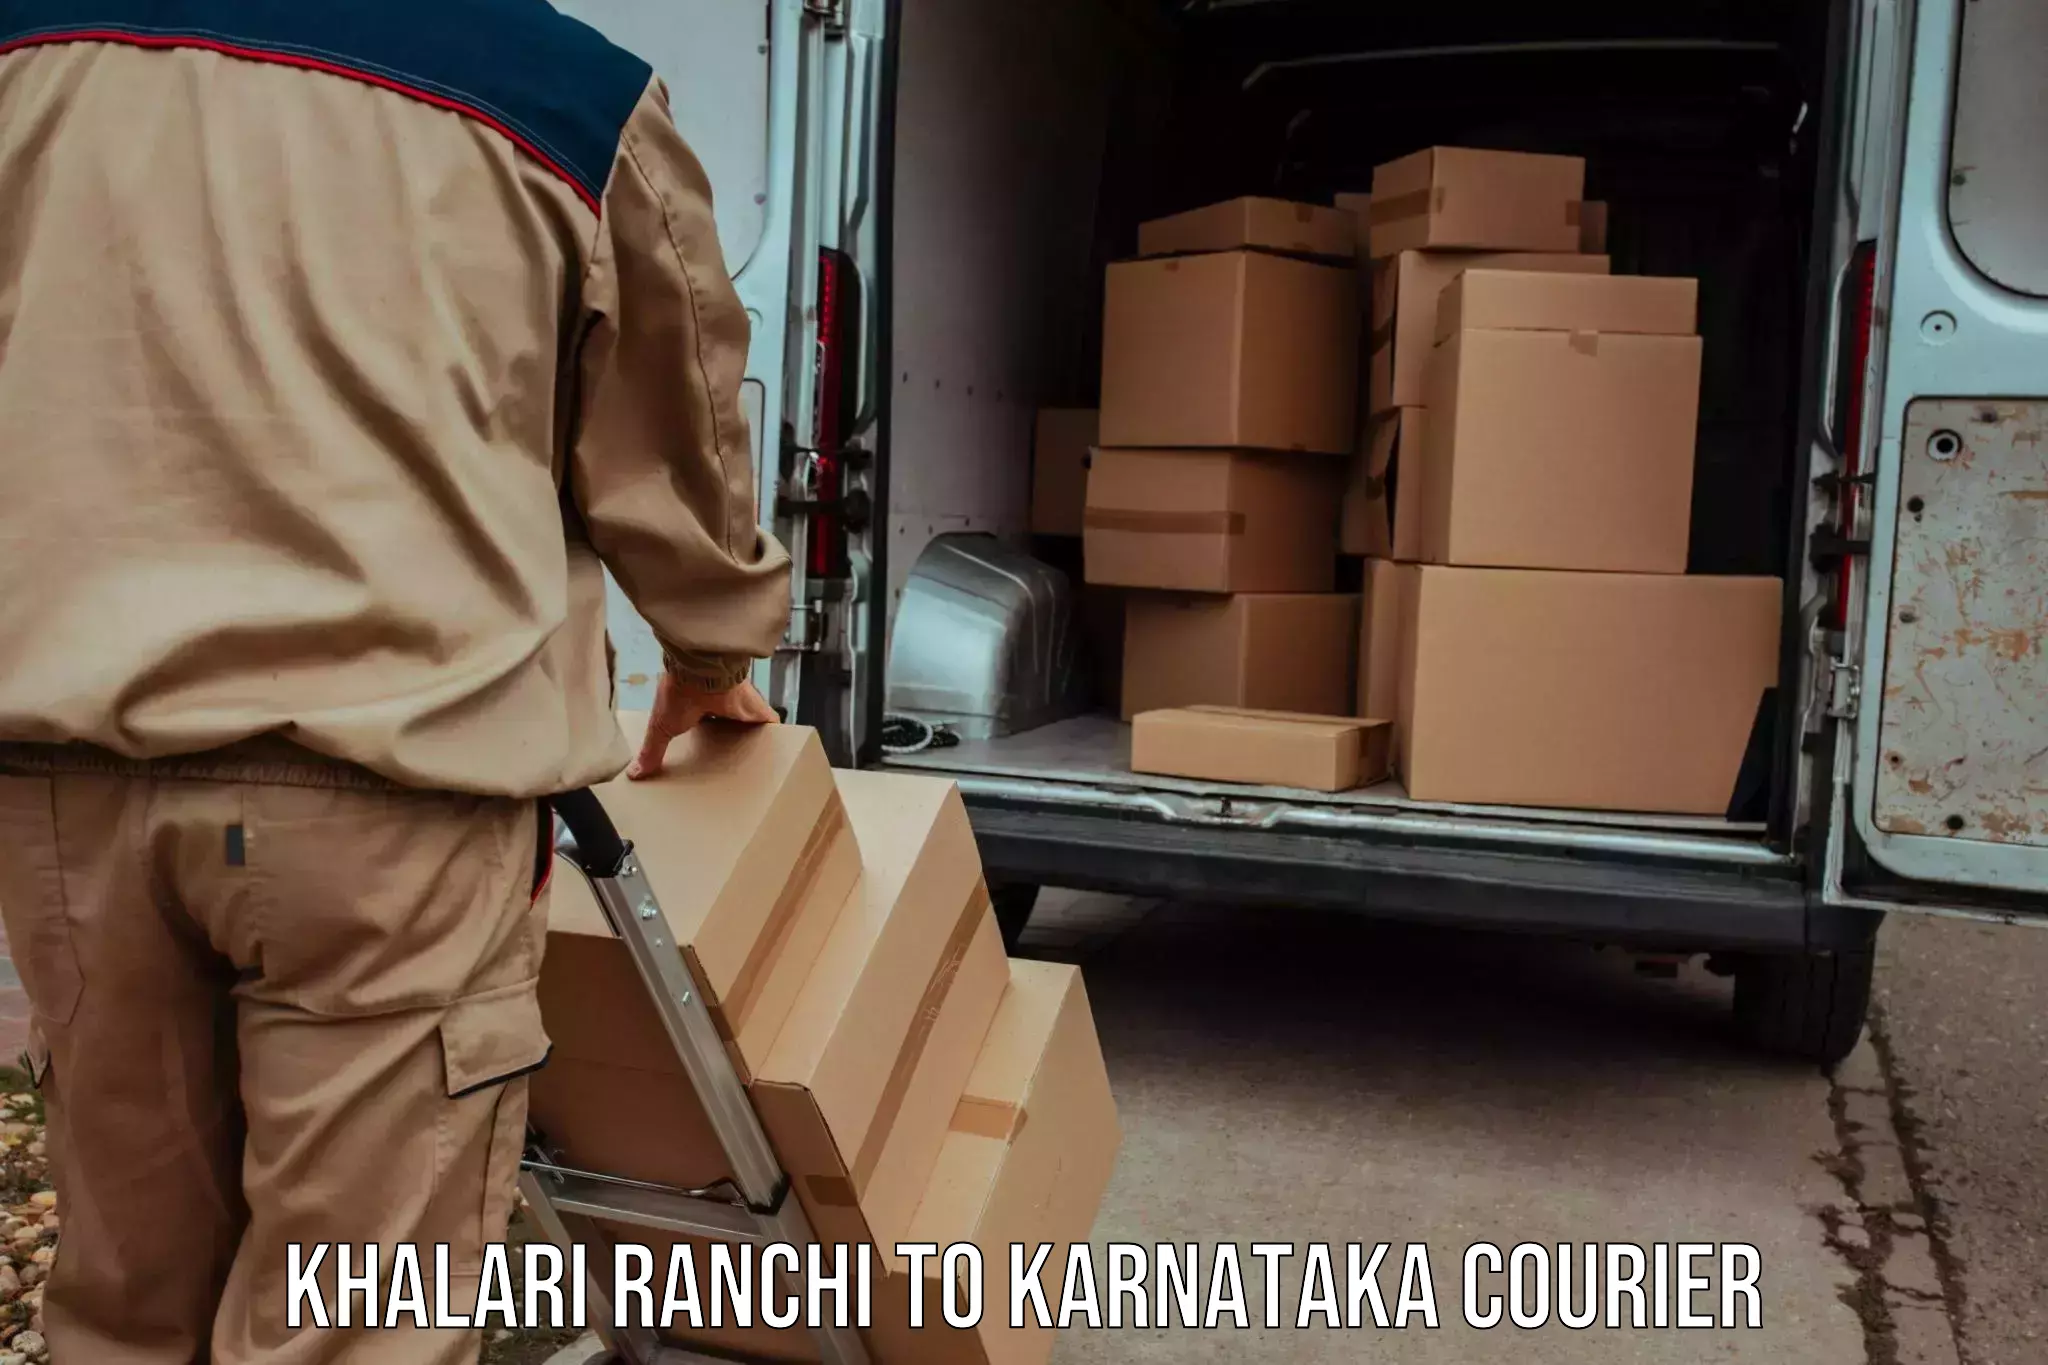 Global courier networks Khalari Ranchi to Karnataka